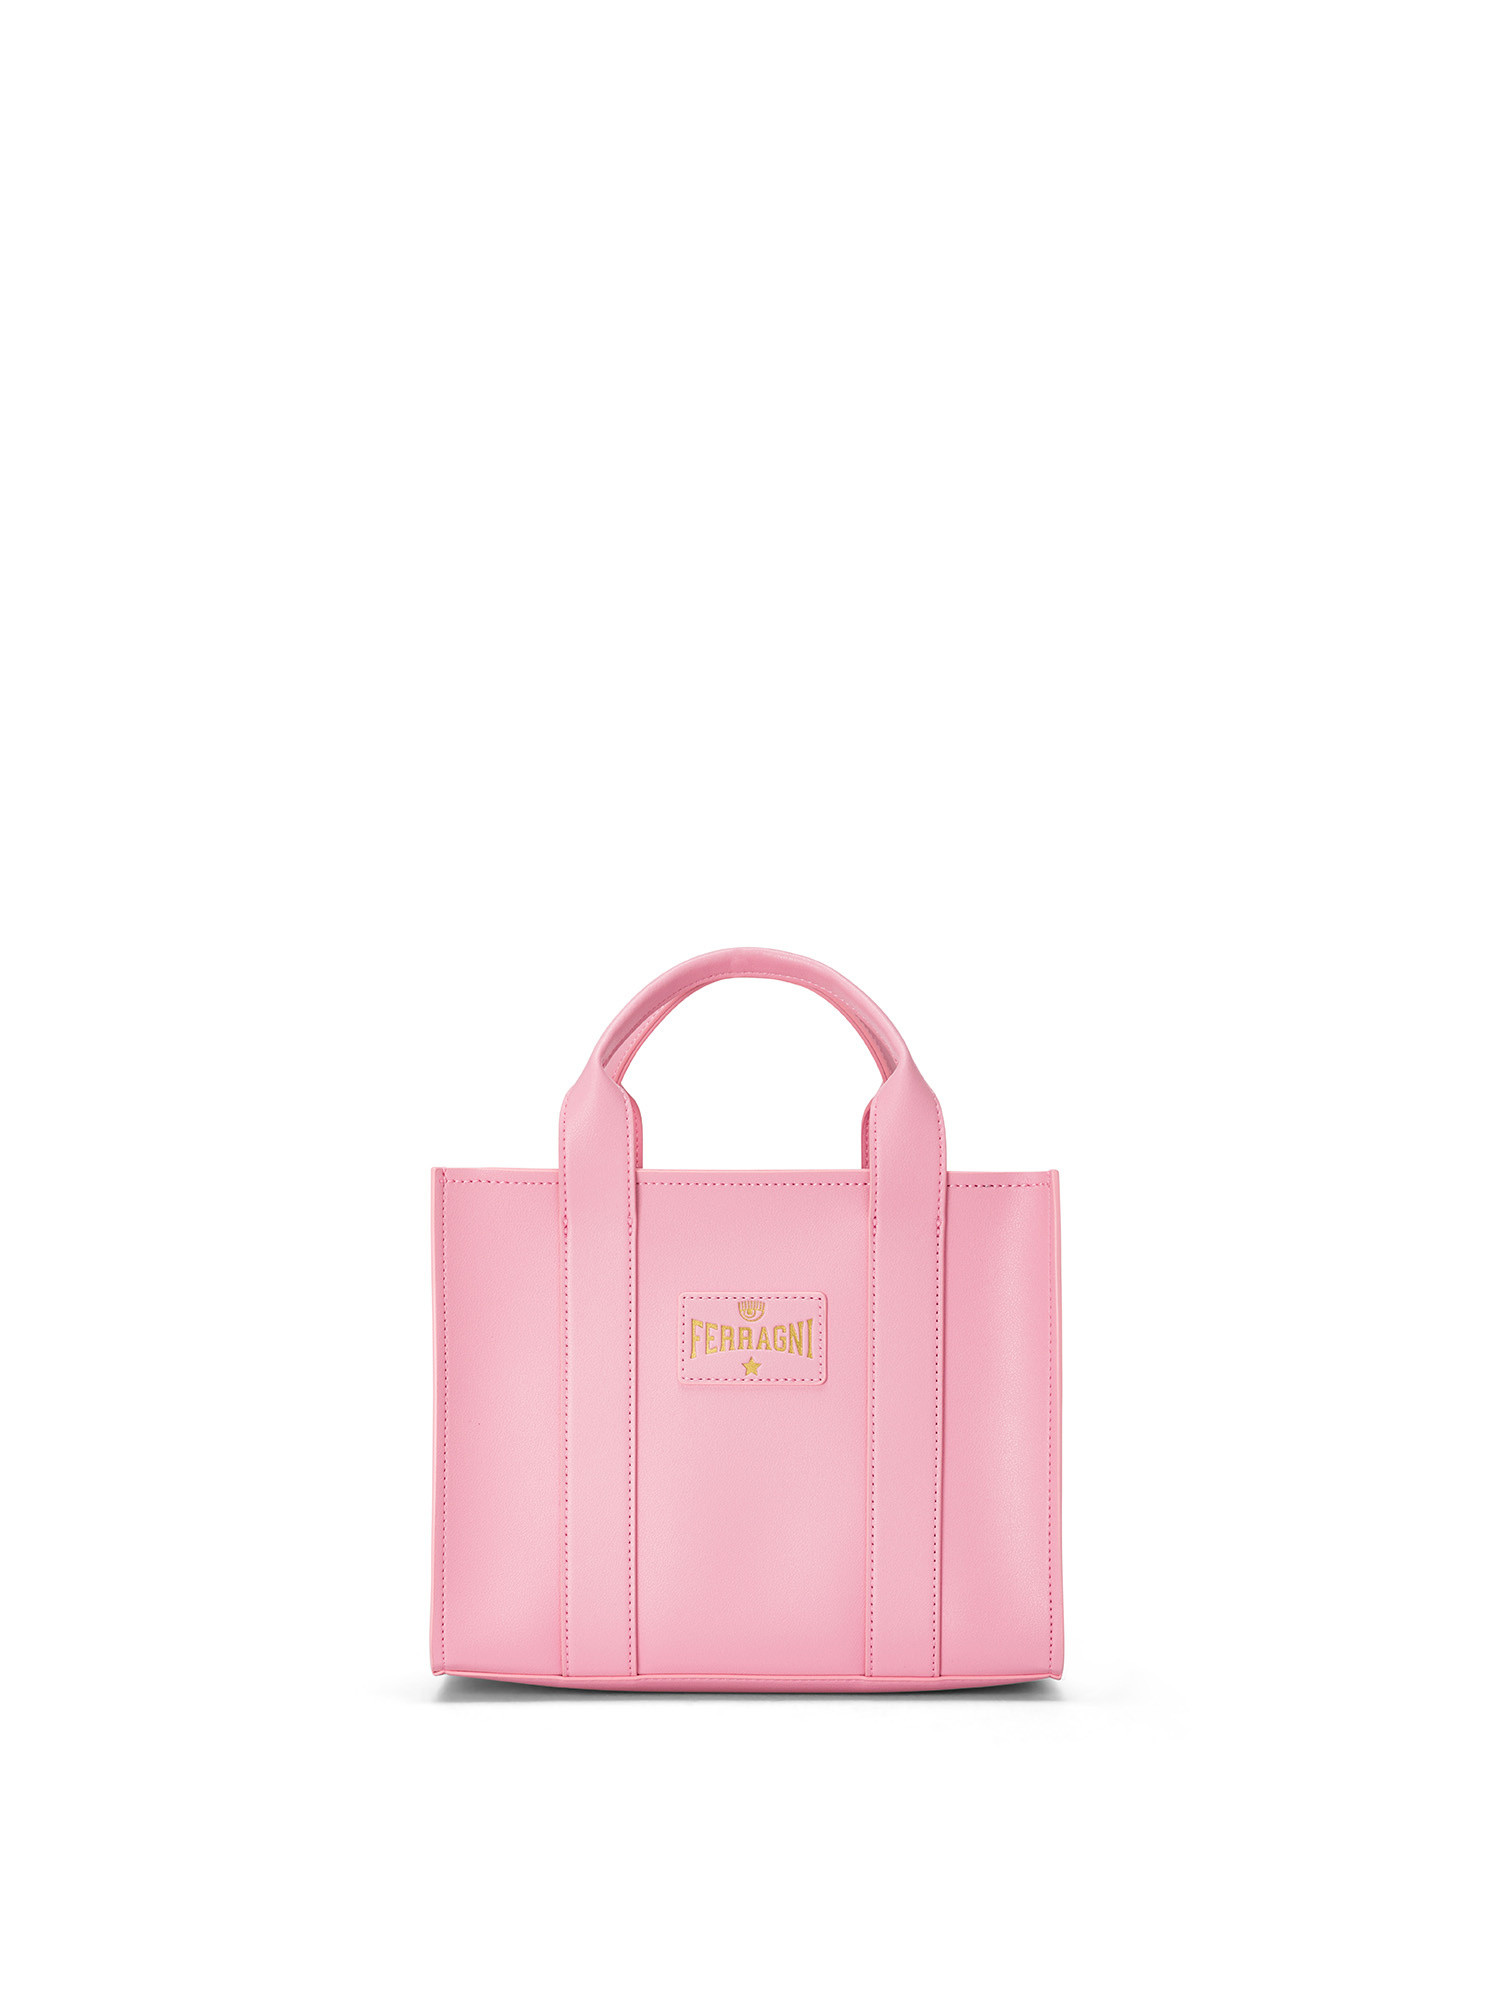 Chiara Ferragni - Shopping bag Range N stretch, Rosa chiaro, large image number 0